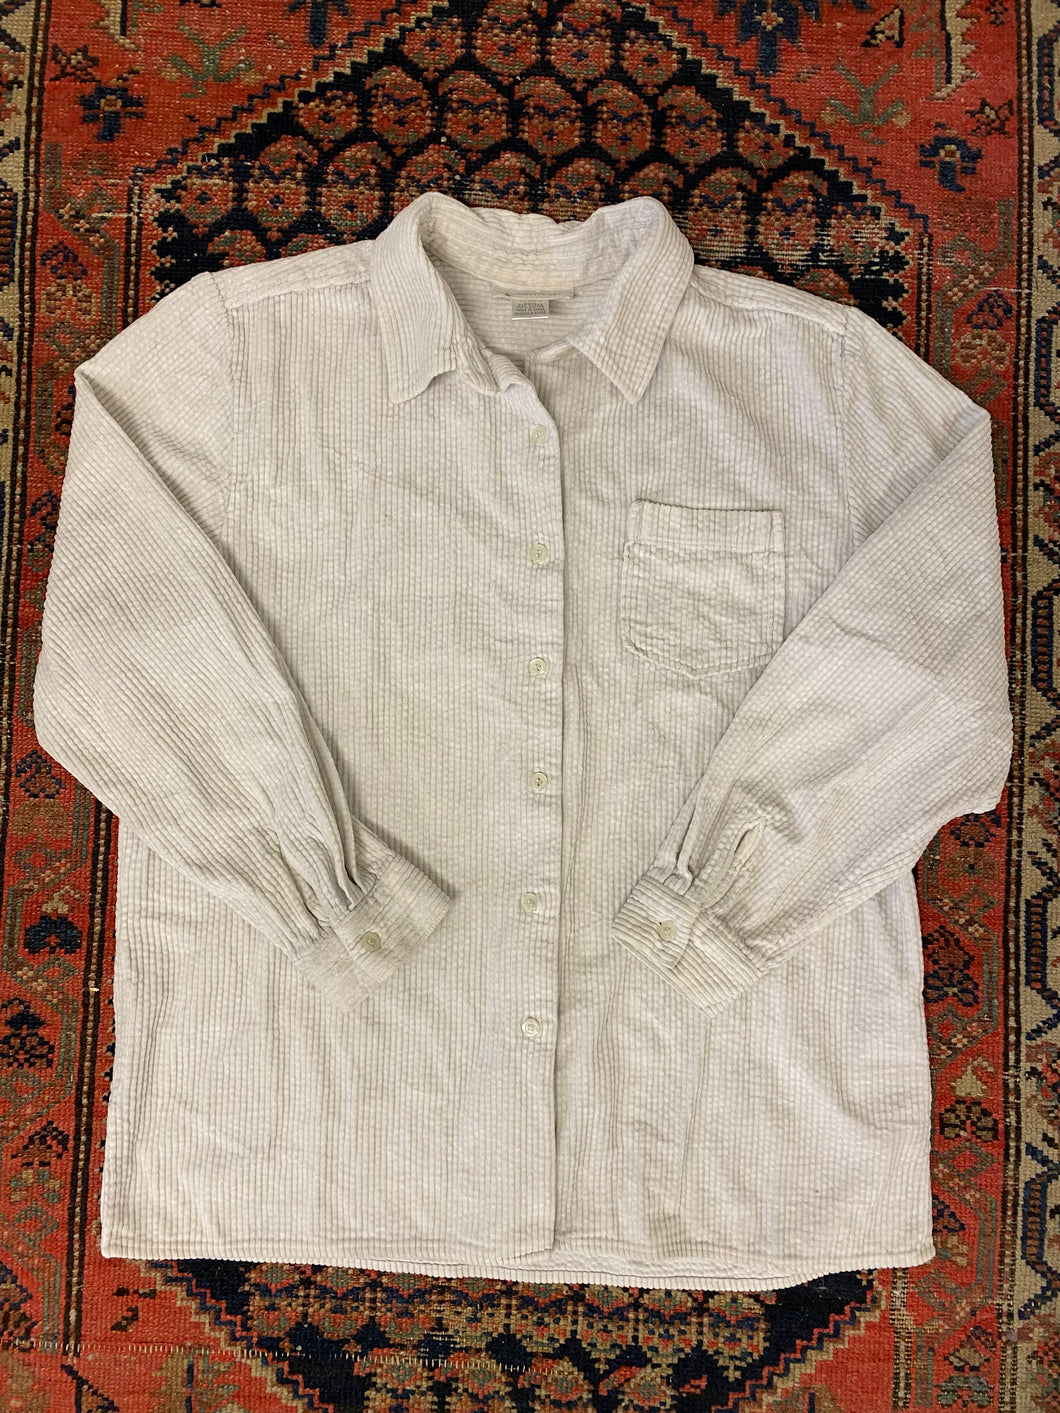 90s Thick Corduroy Button Up Shirt - L